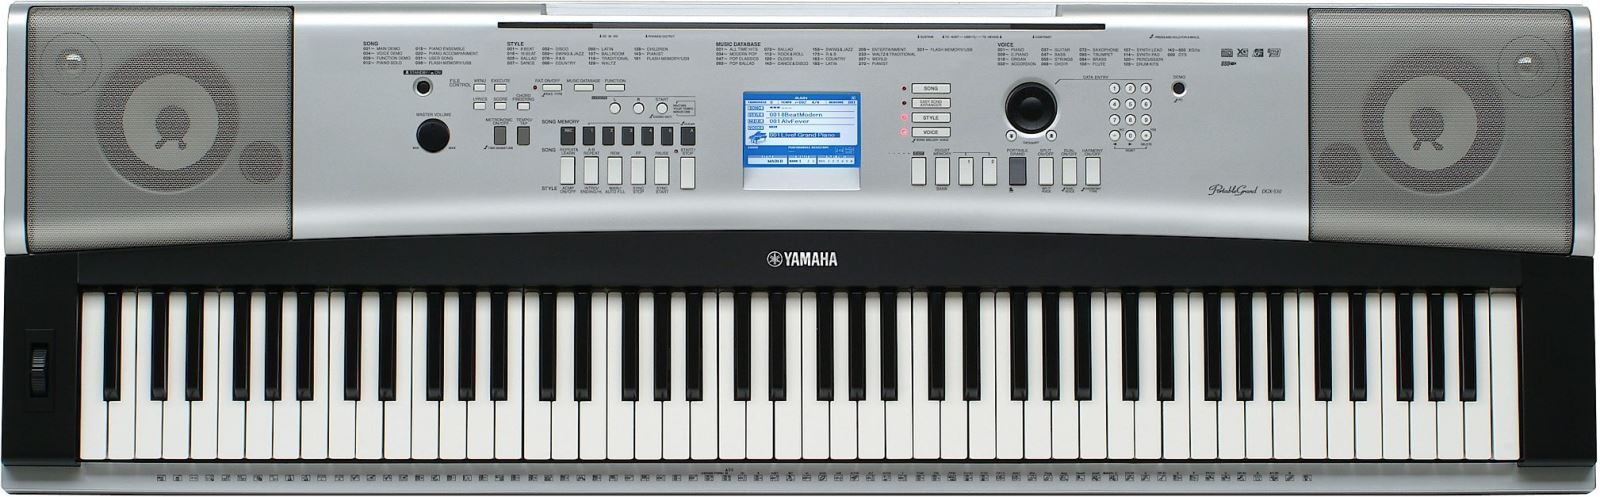 Portable keyboard Yamaha DGX-530